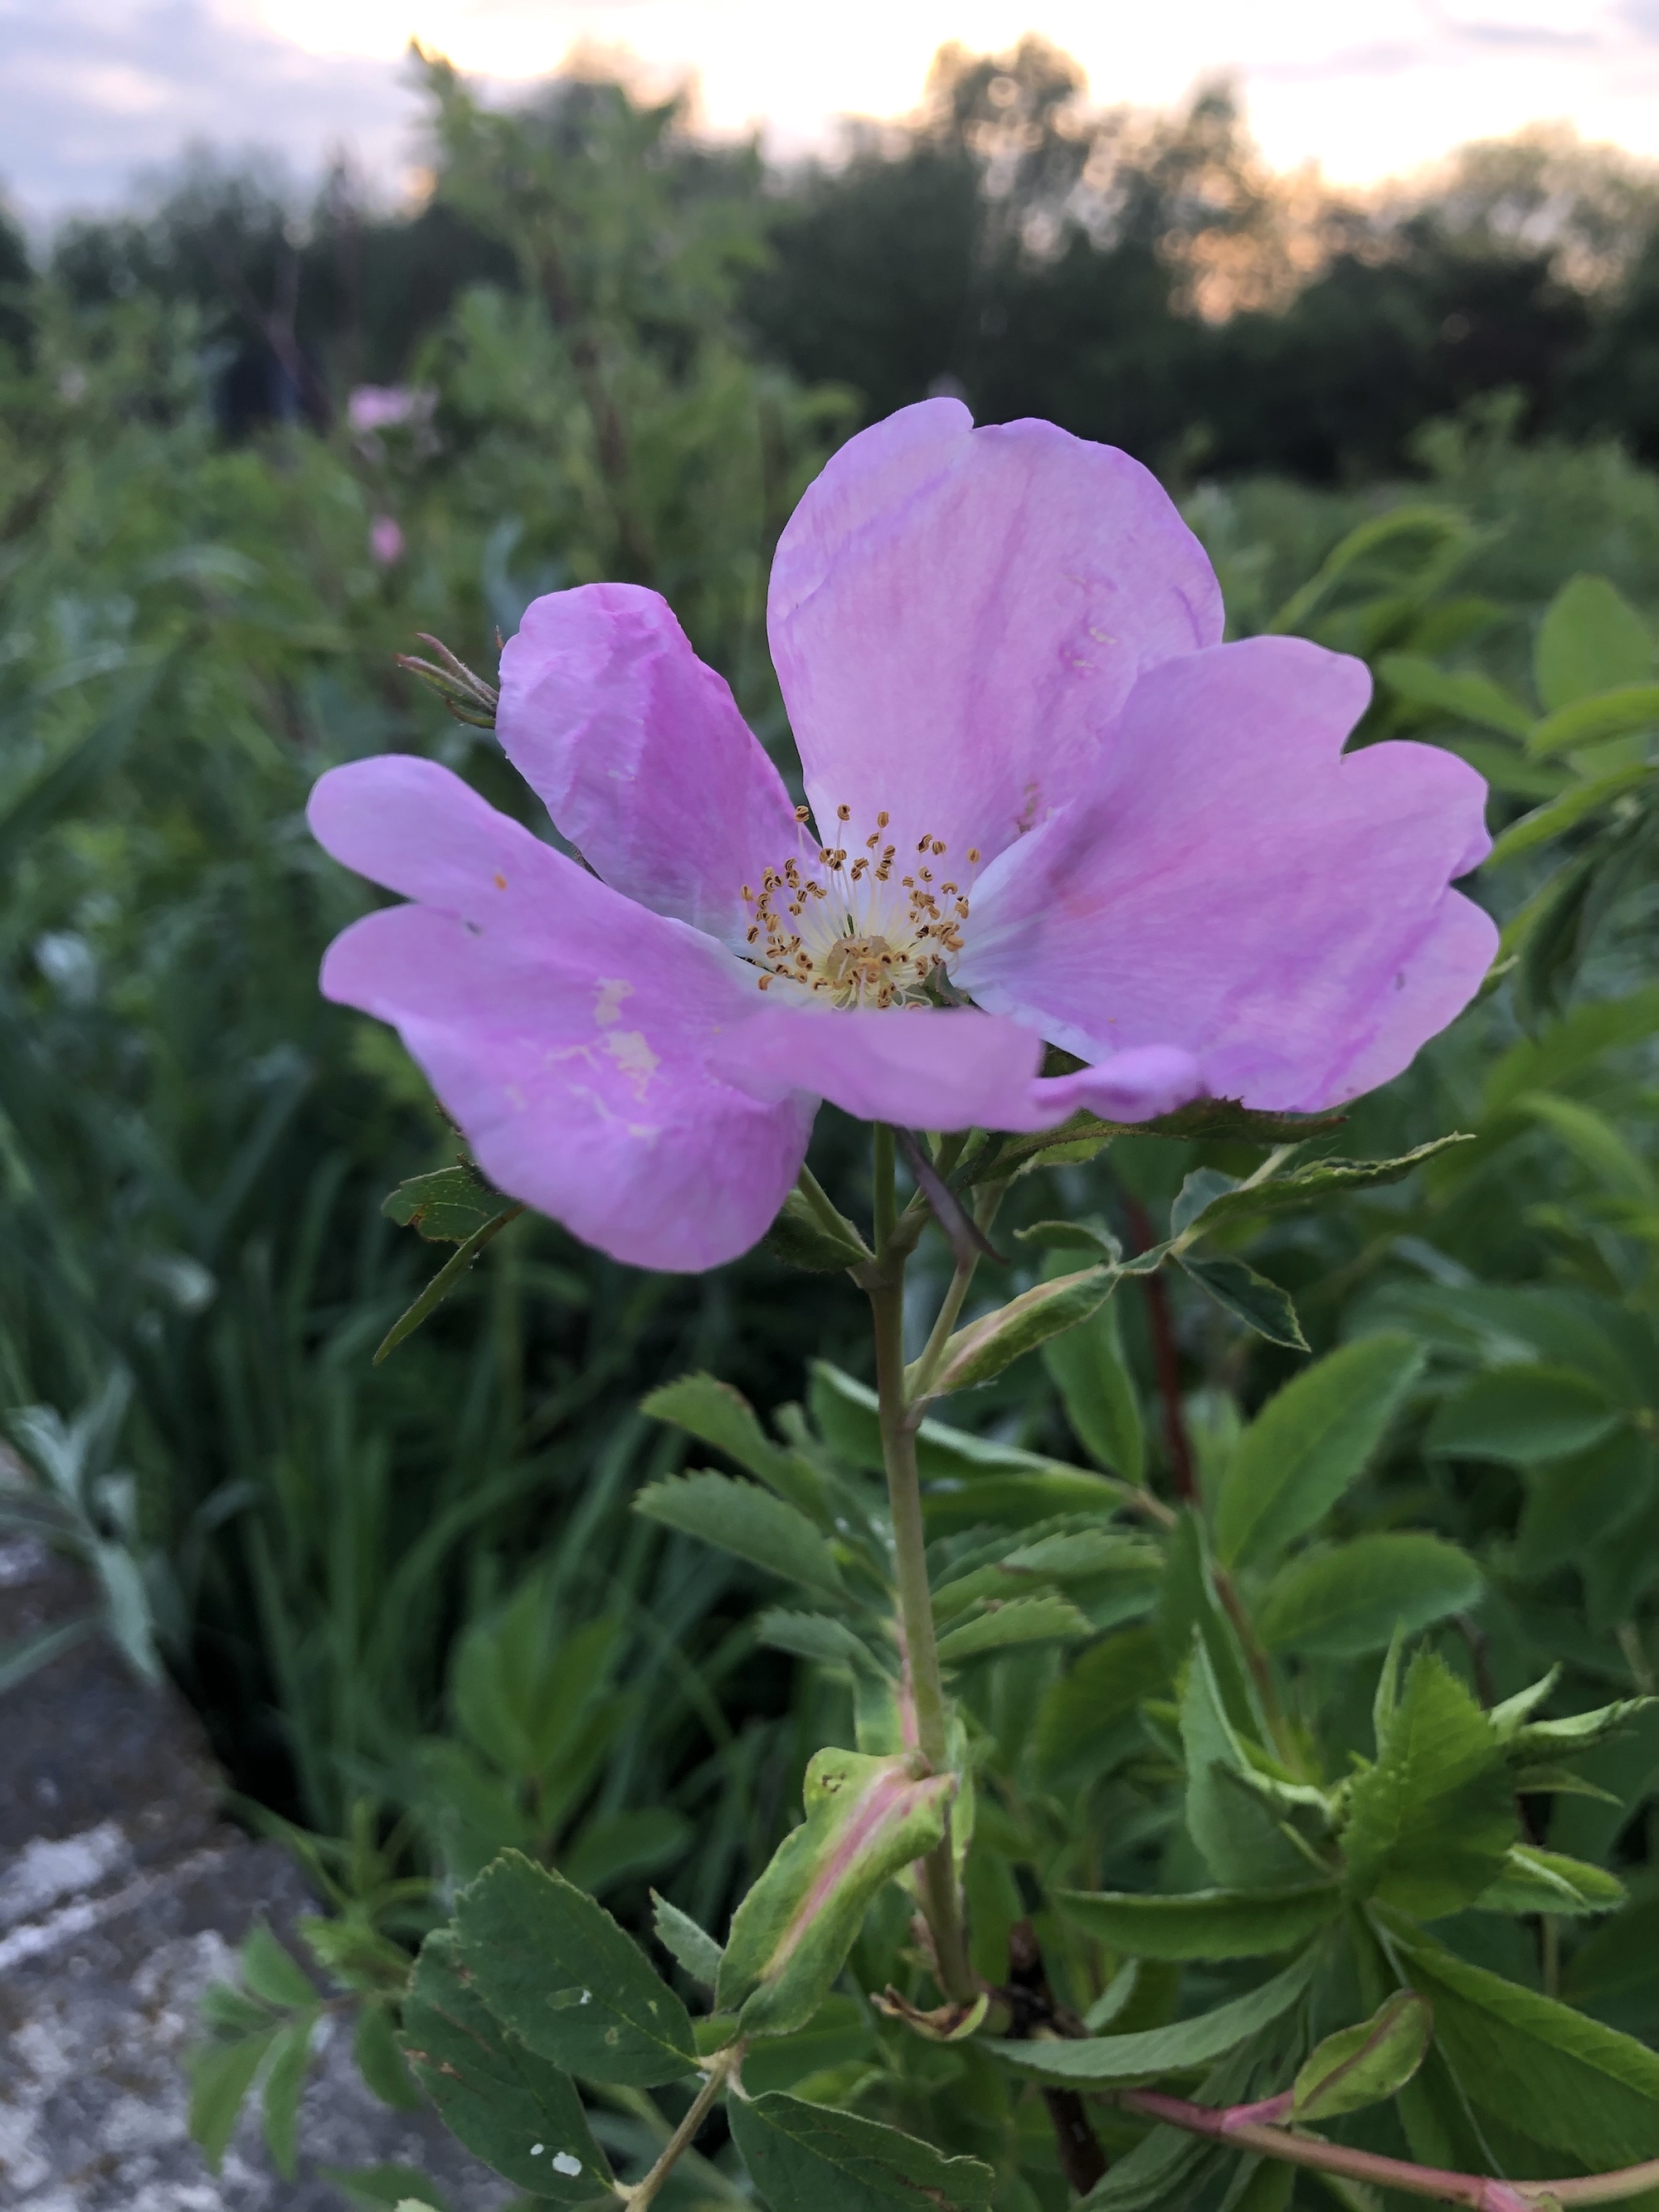 Prairie Rose in UW Arboretum in Madison, Wisconsin on May 24, 2021.